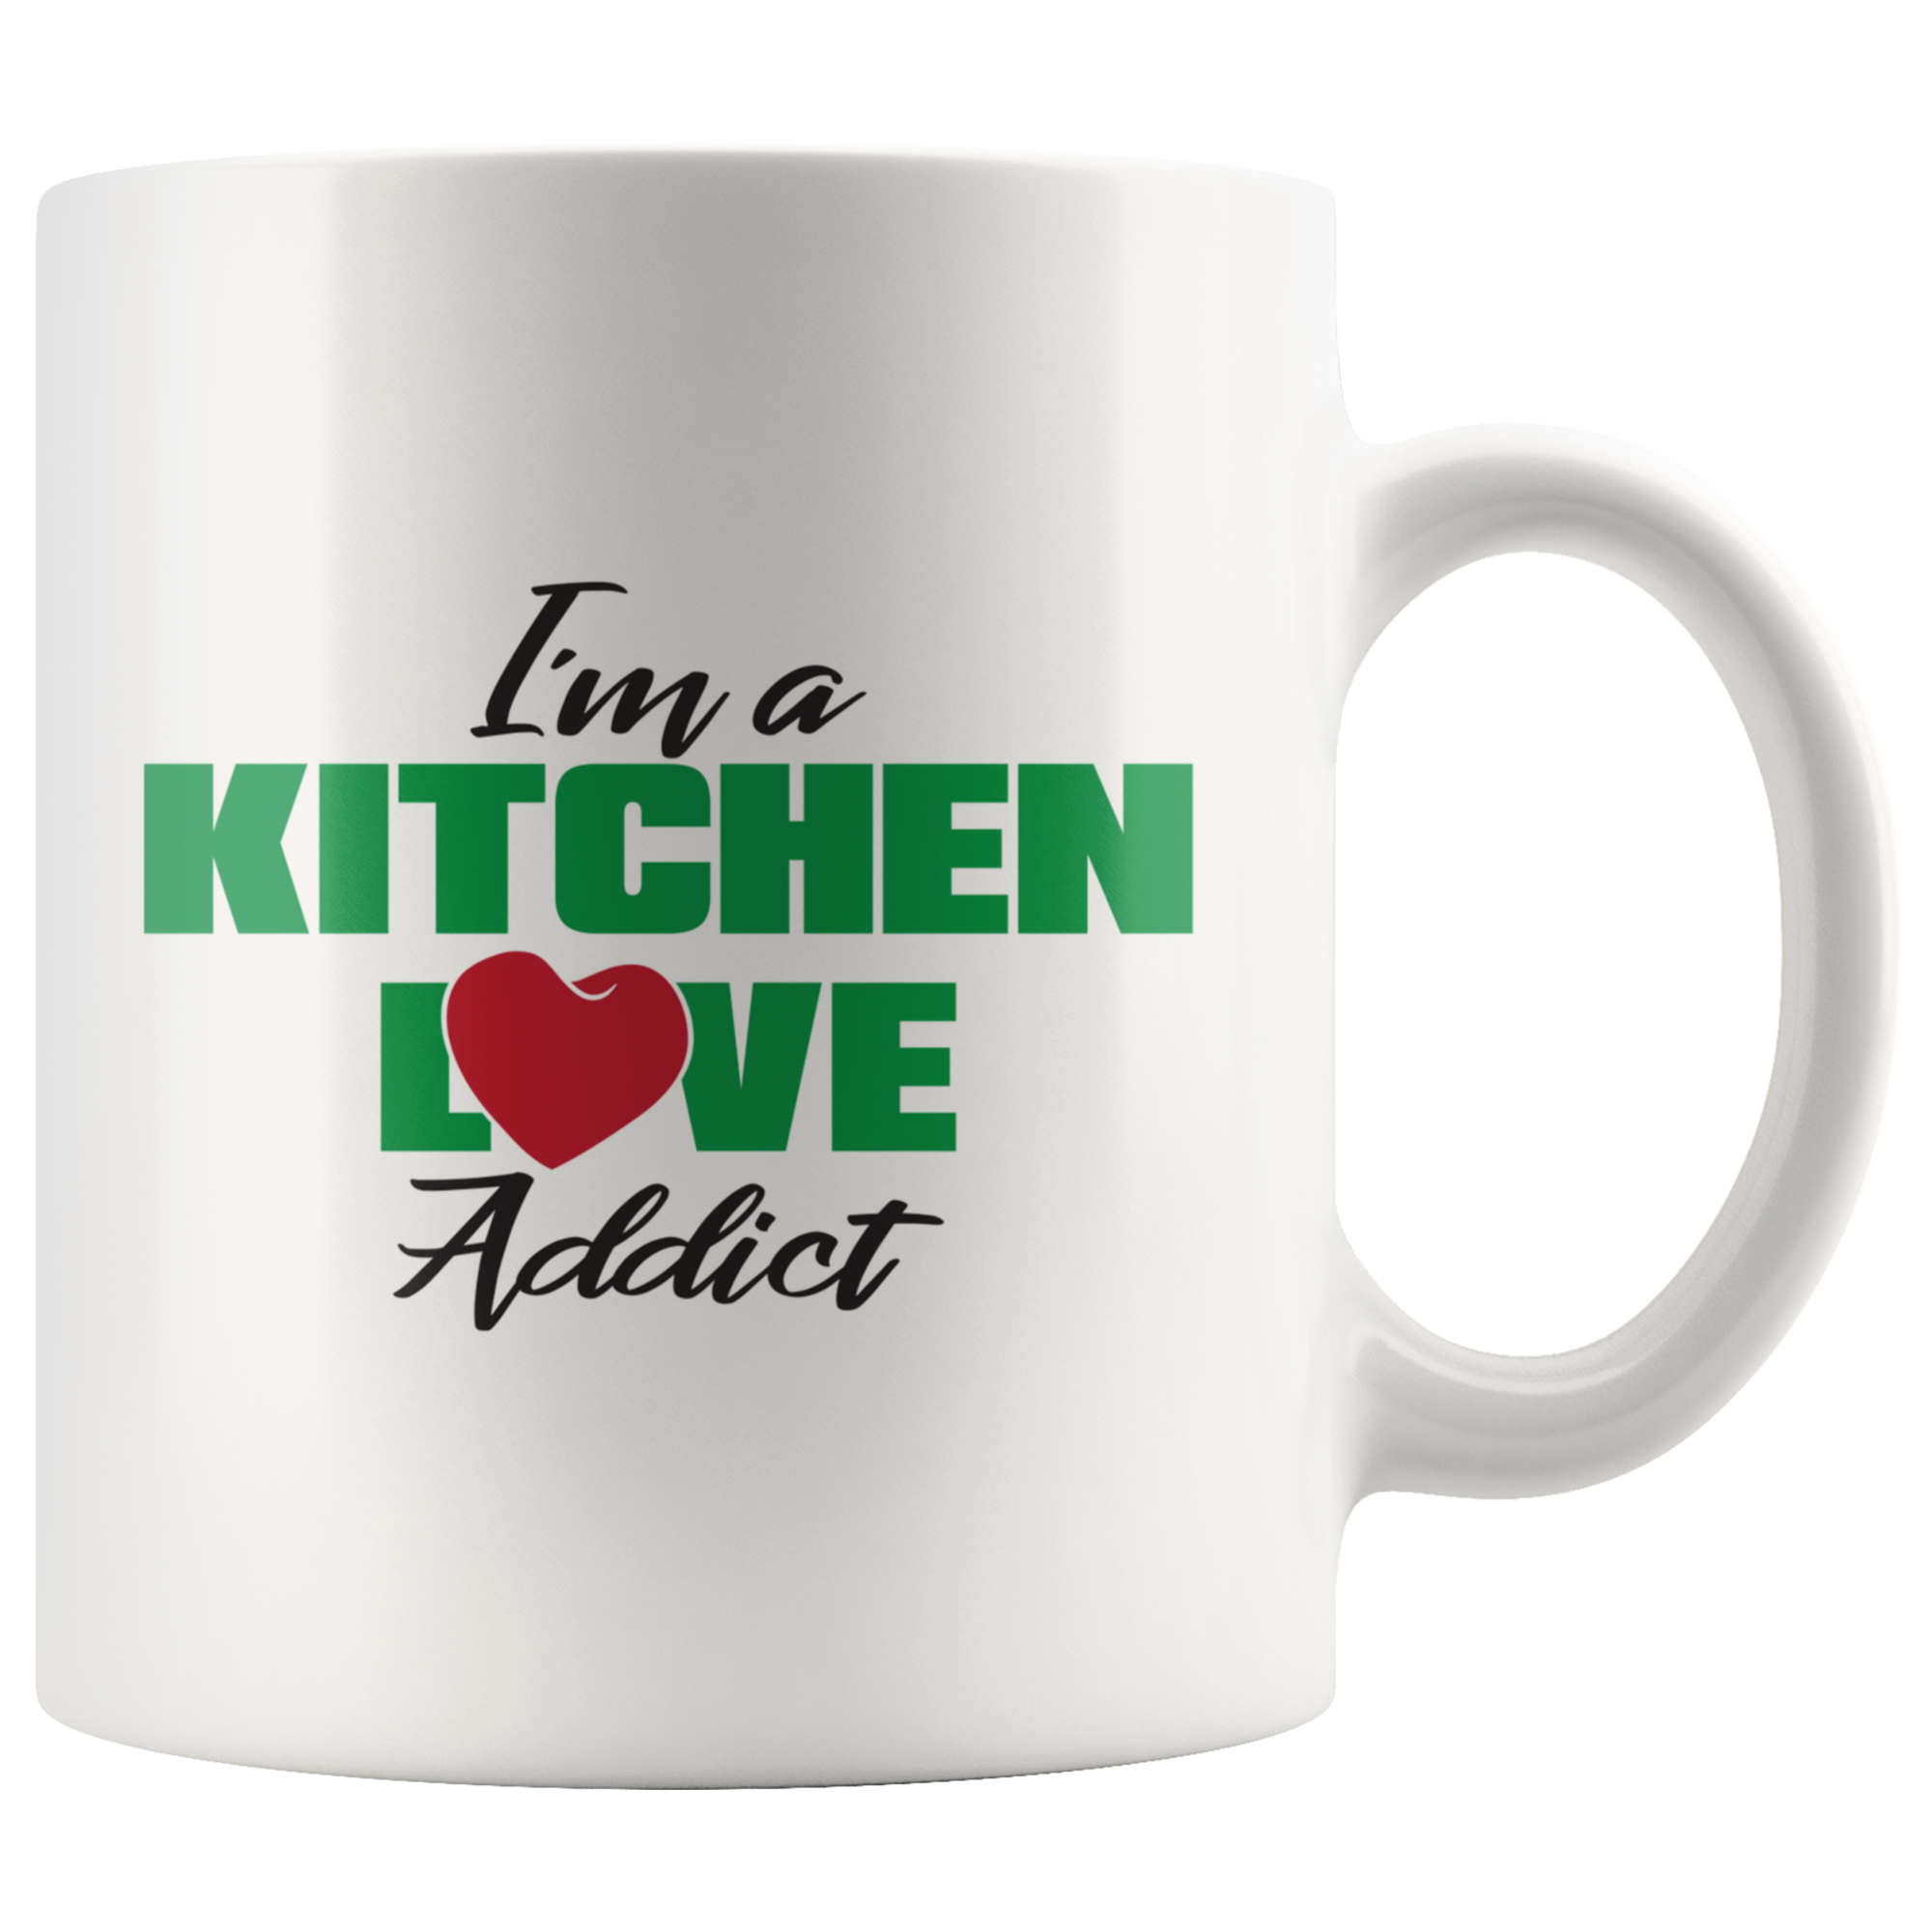 I'm a Kitchen Love Addict Coffee Mug